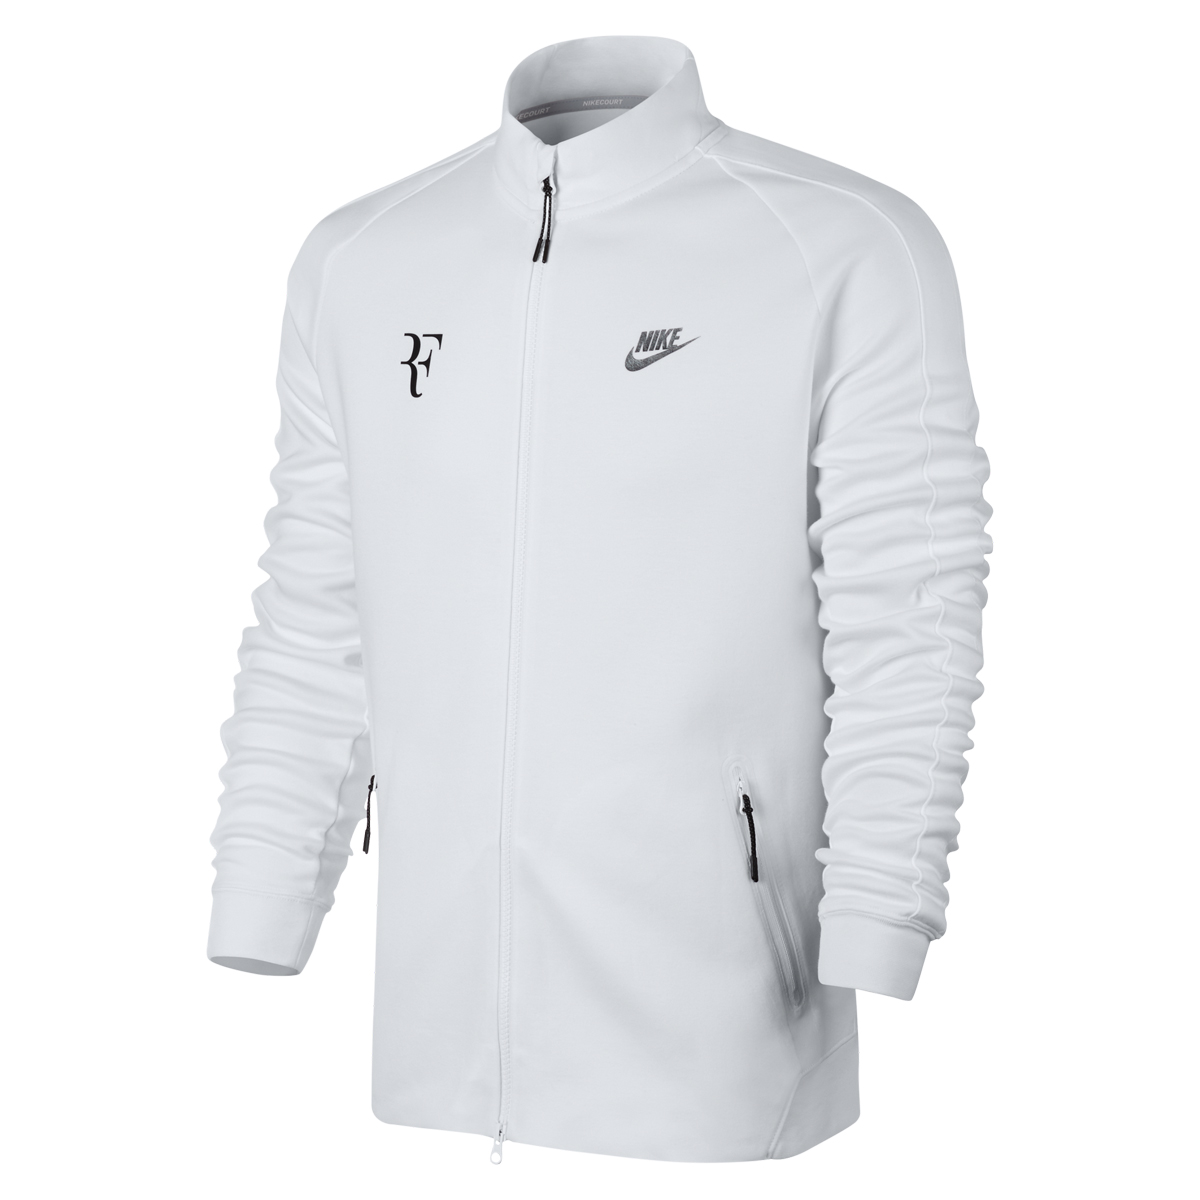 oportunidad Aviación templo Roger Federer 2017 Wimbledon Nike Outfit • FedFan